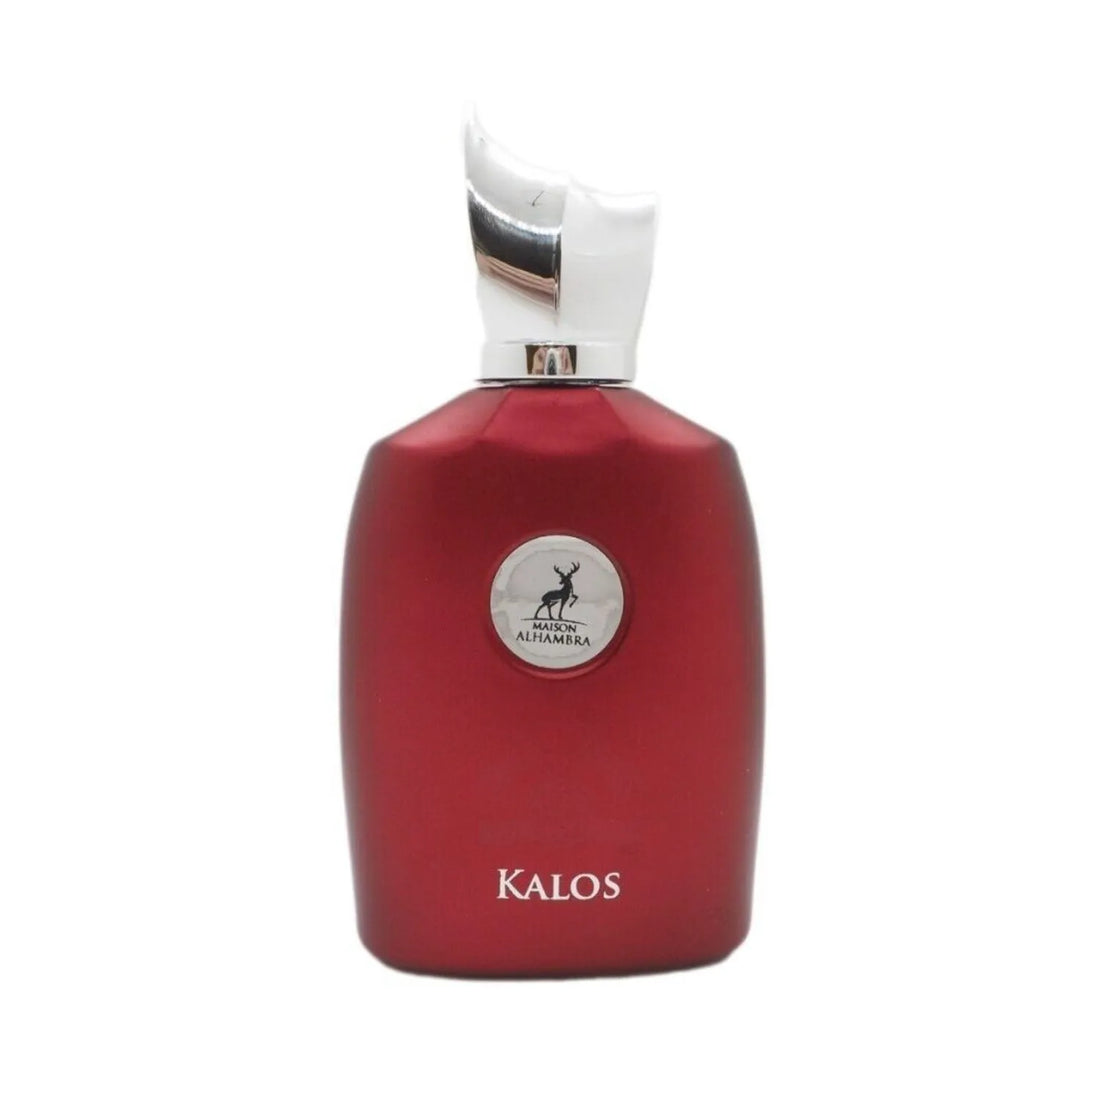 Kalos Perfume Bottle